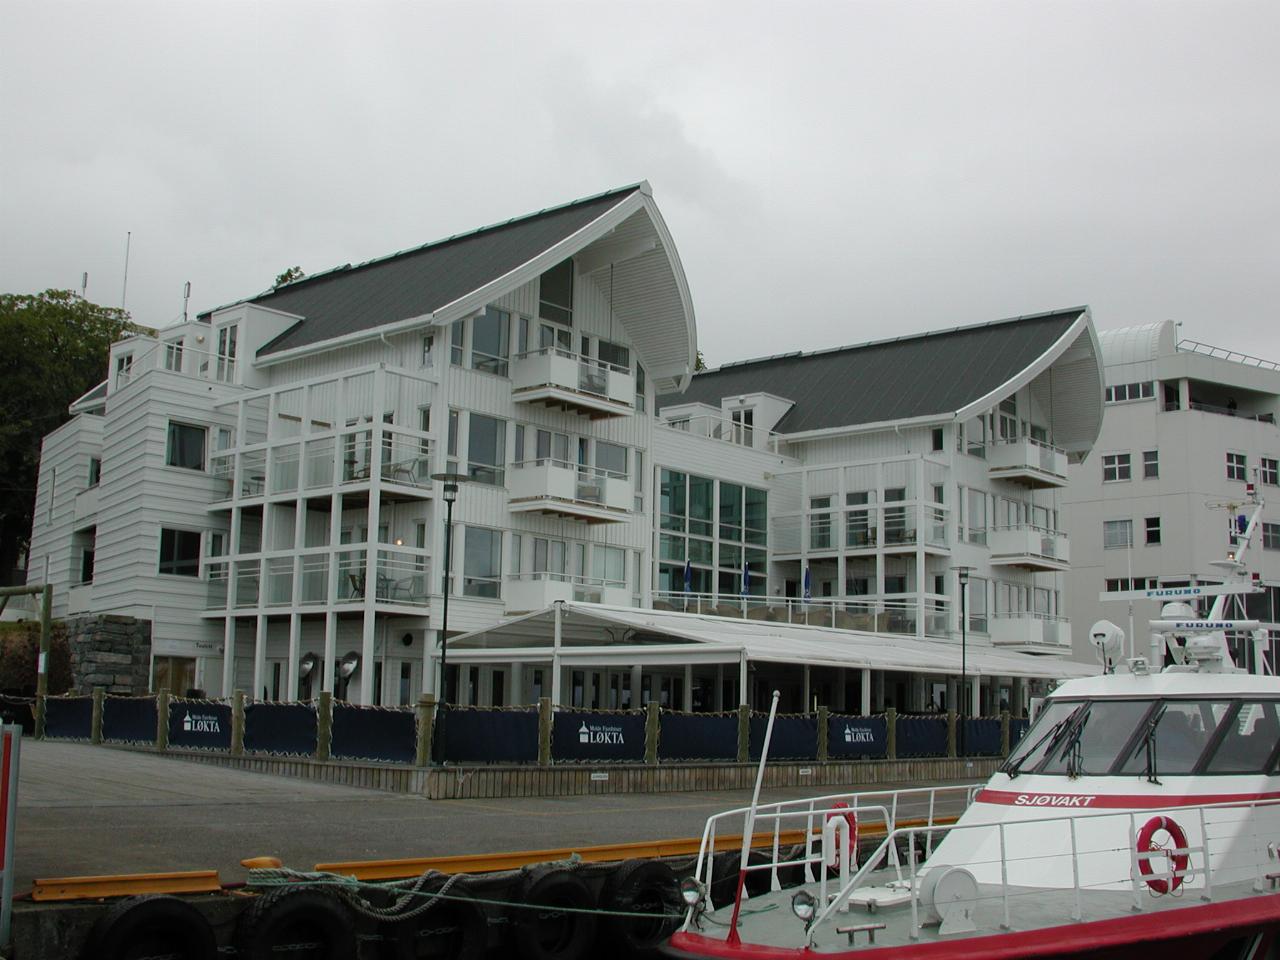 KPLU Viking Jazz: Nautical flavoured architecture to this restaurant on Molde's waterfront